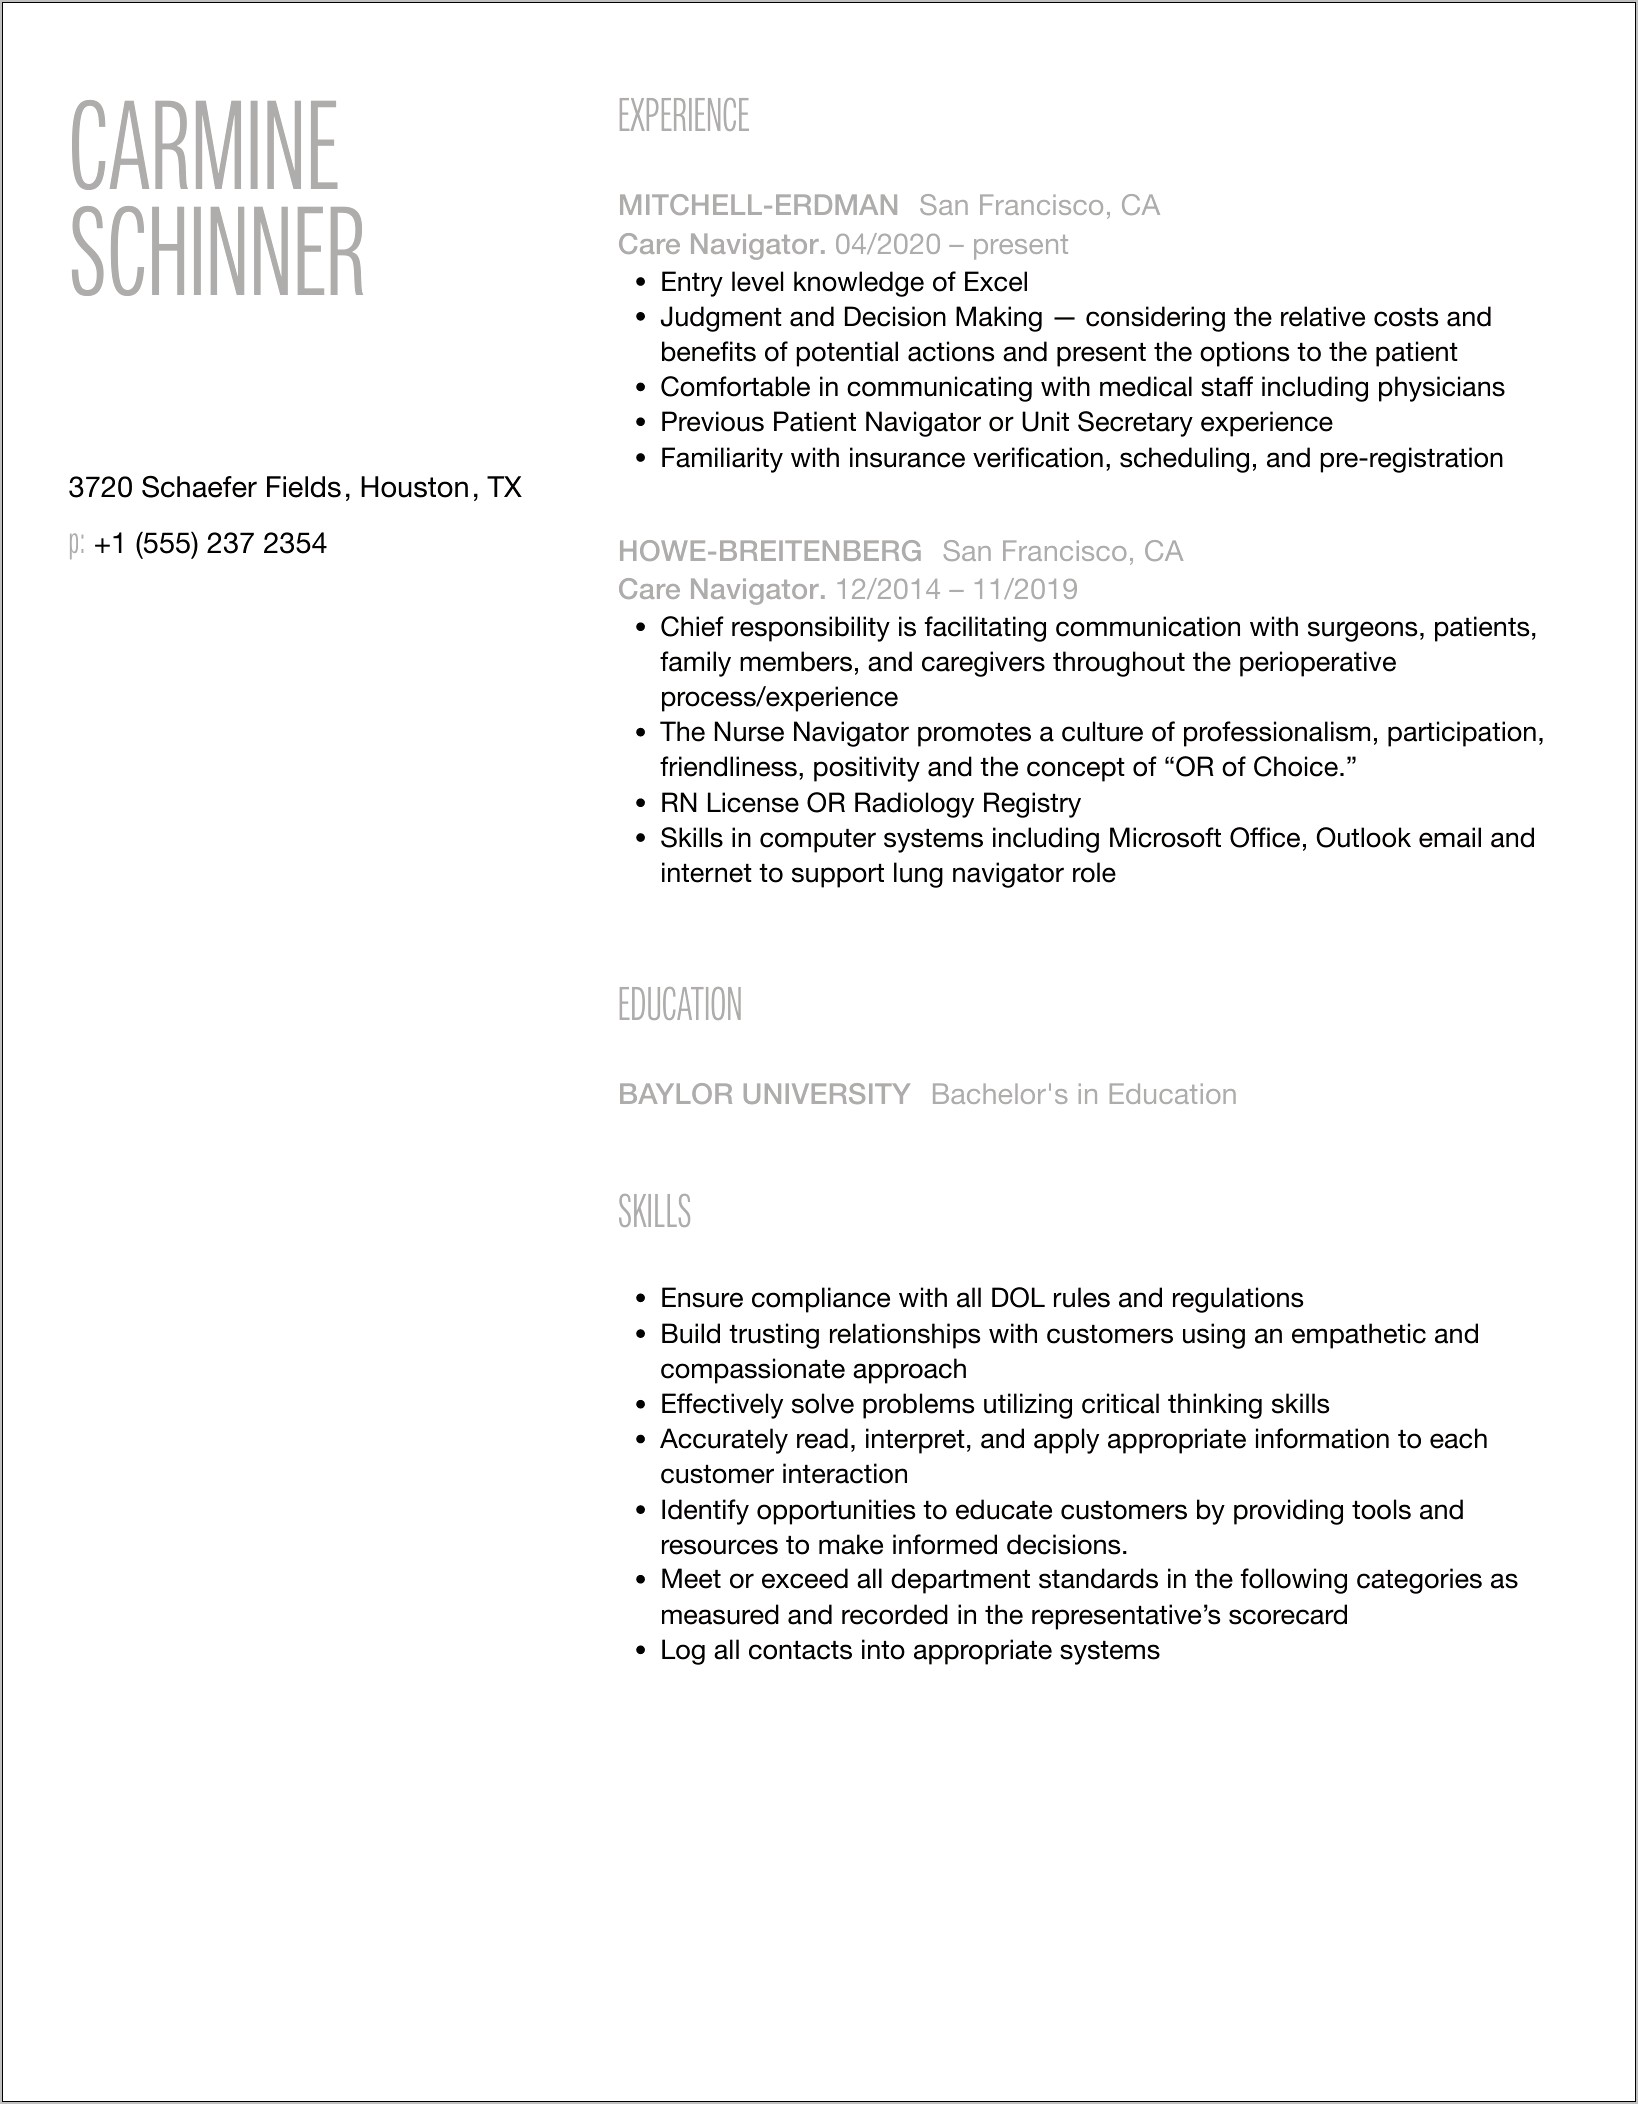 Care Navigator Job Description Resume